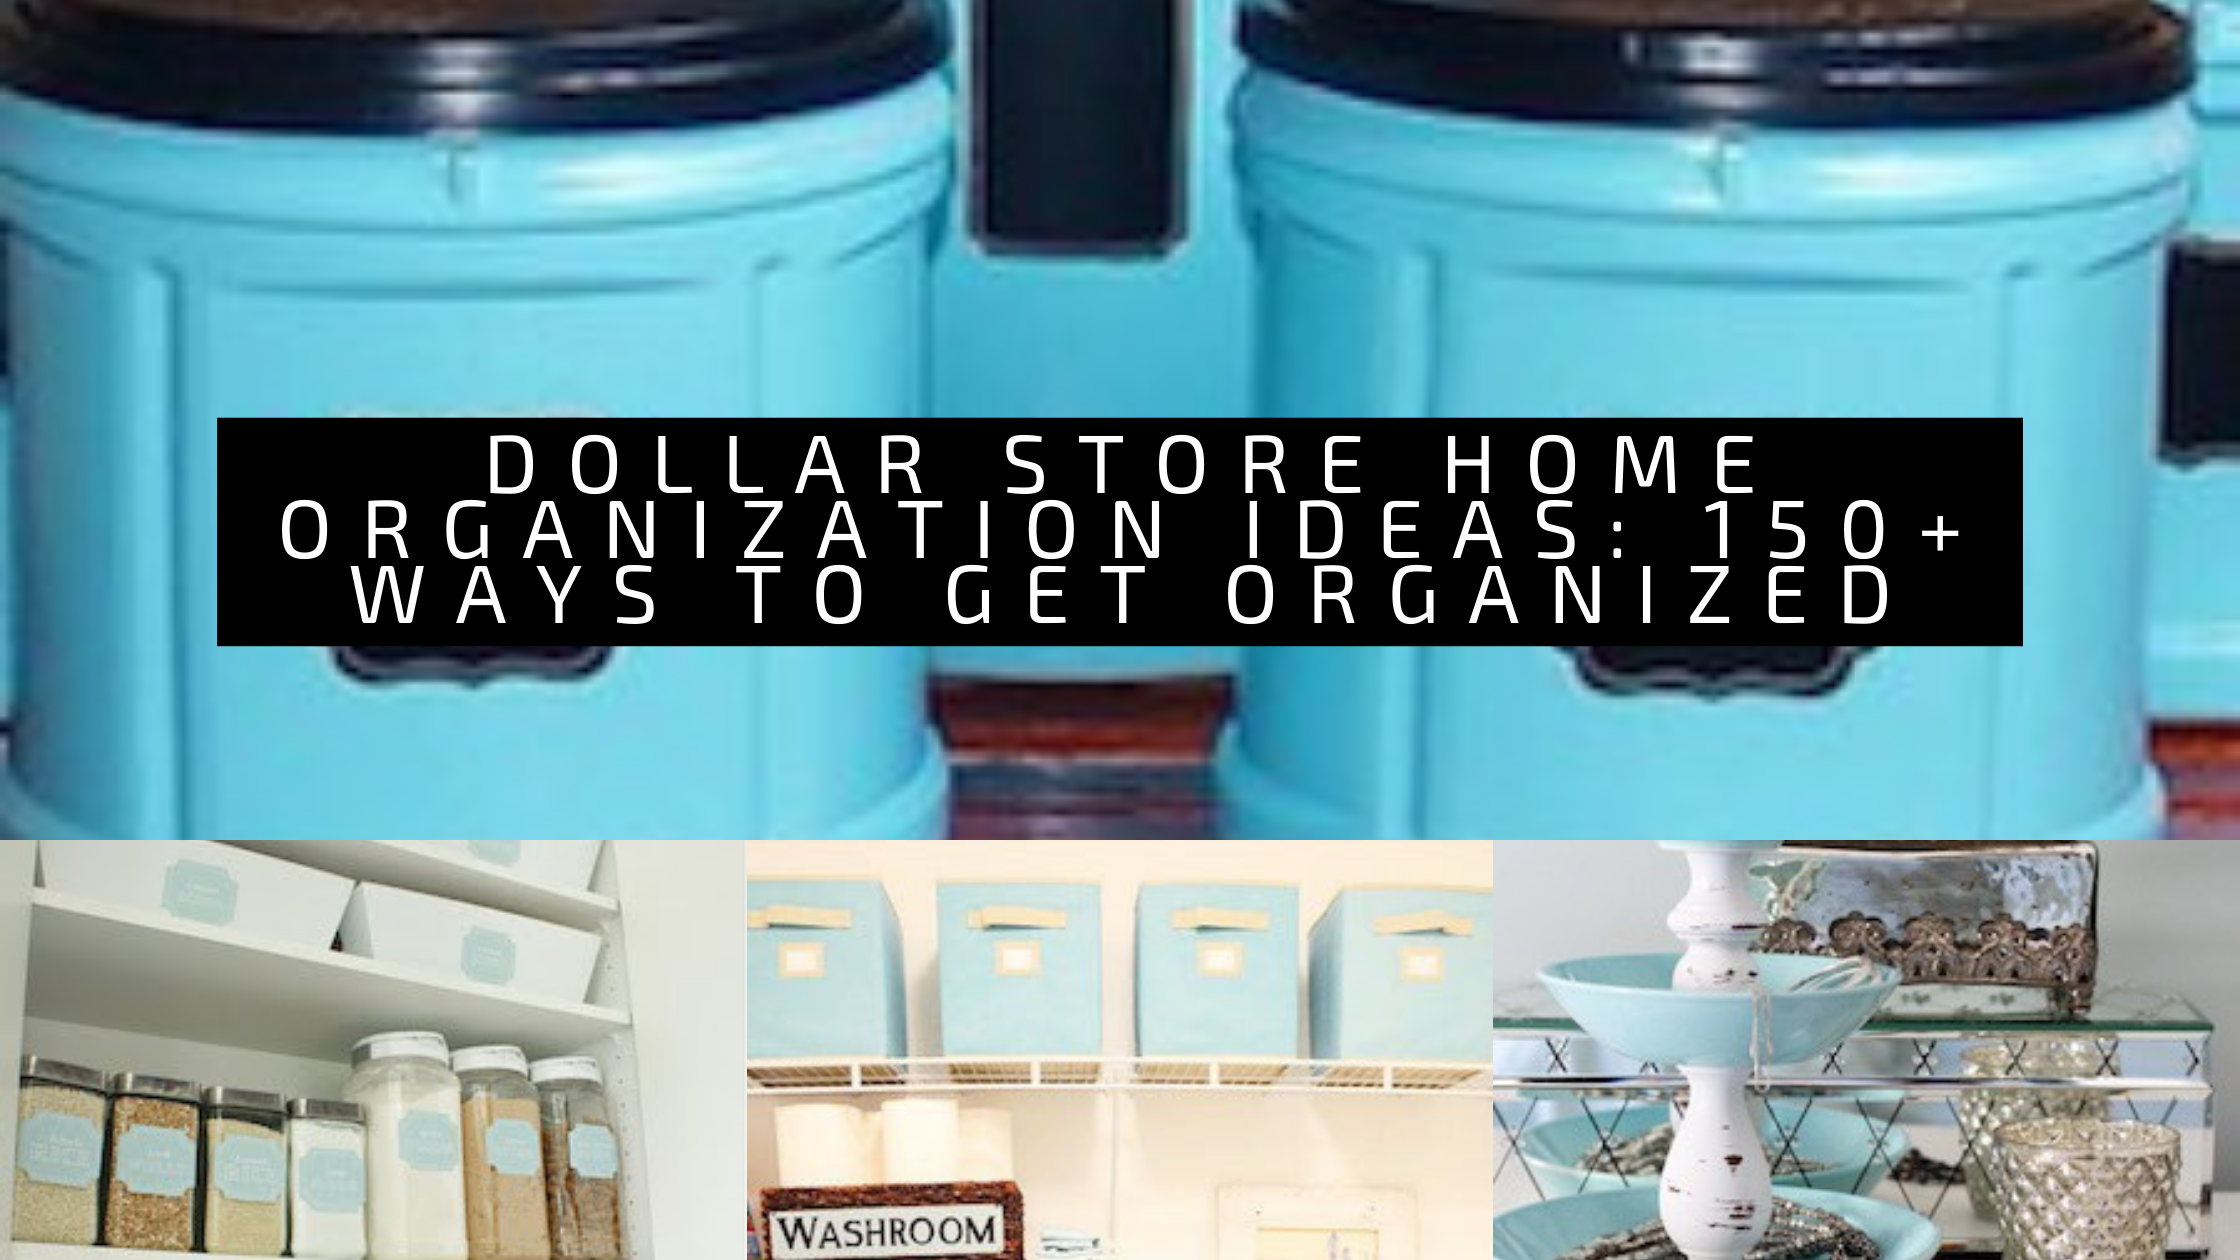 Dollar Store Home Organization Ideas: 150+ Ways to Get Organized 16